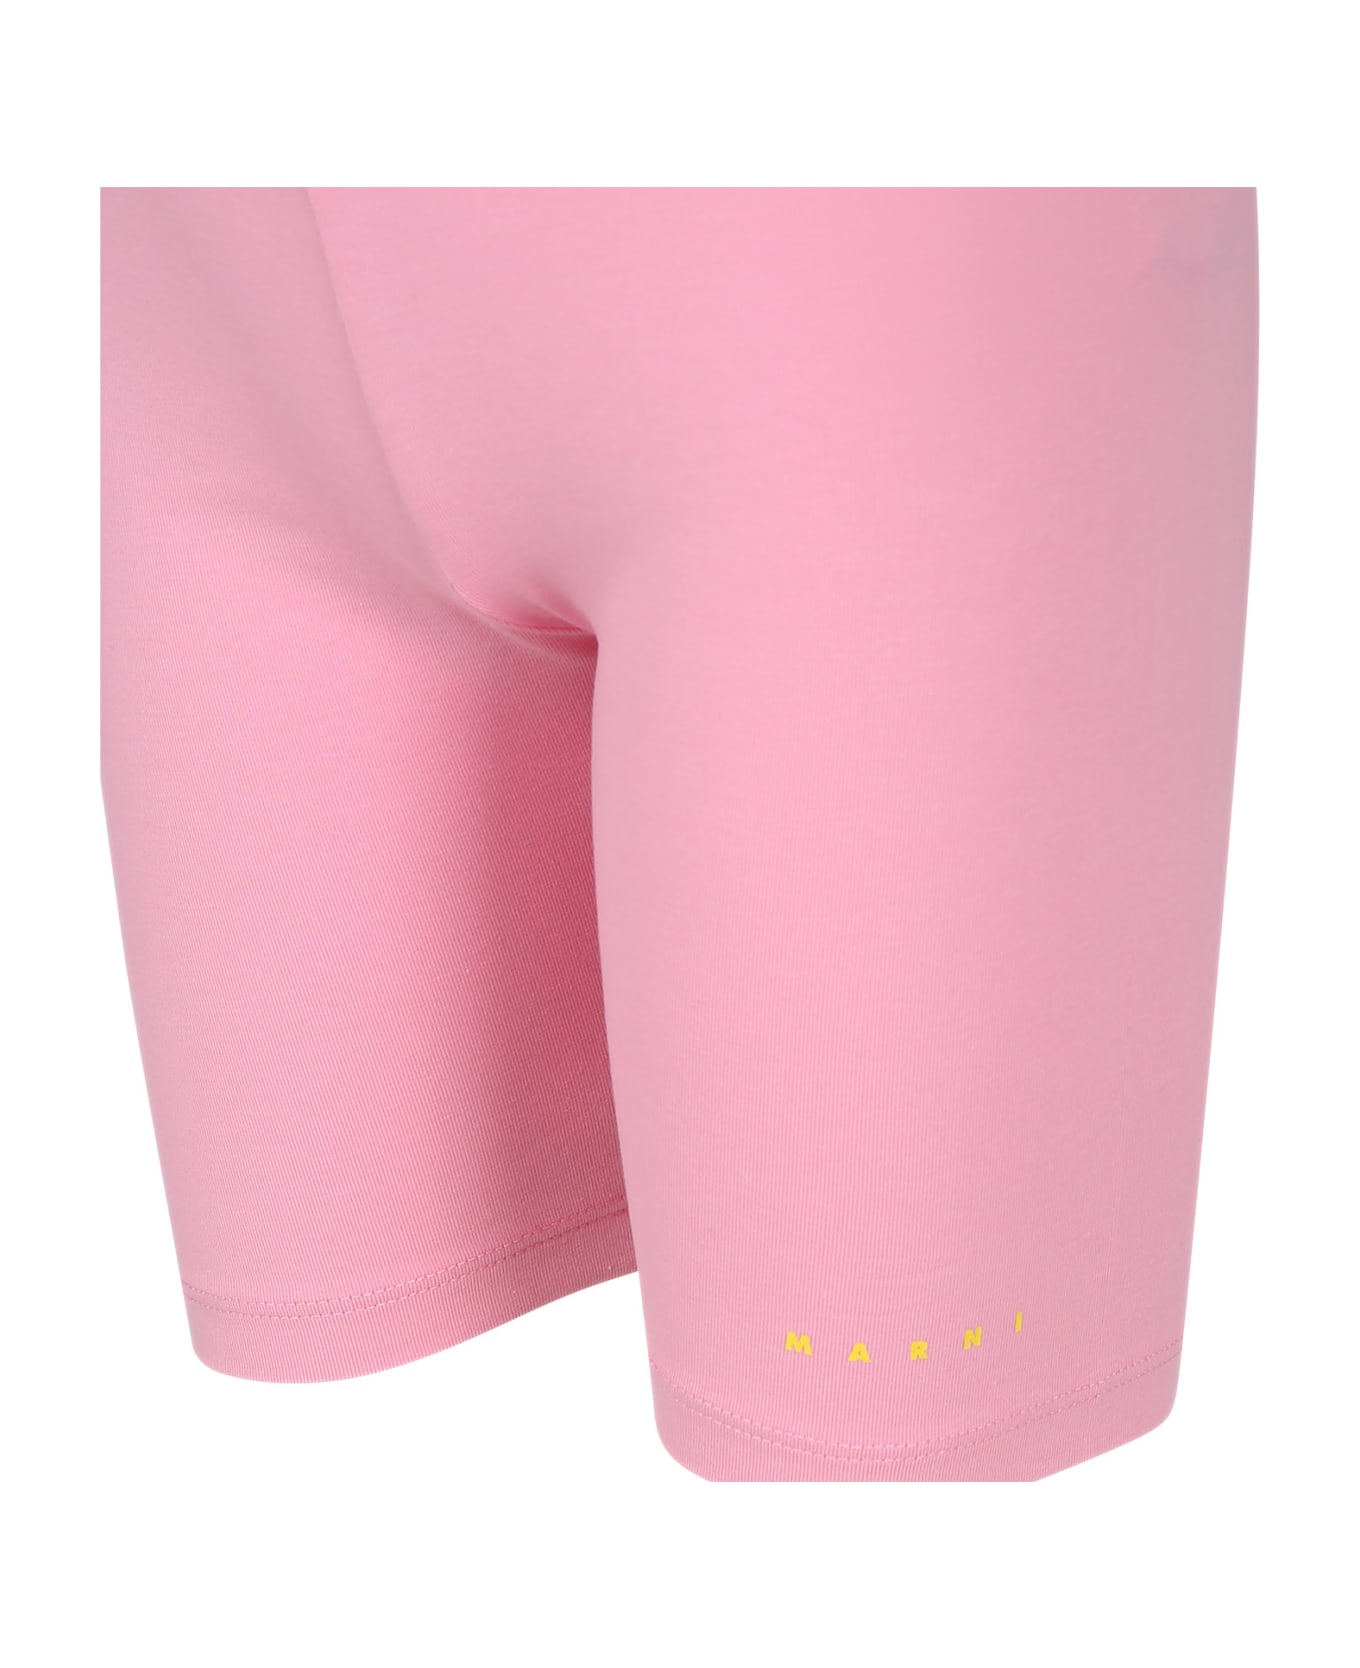 Marni Pink Sports Shorts For Girl - Pink ボトムス